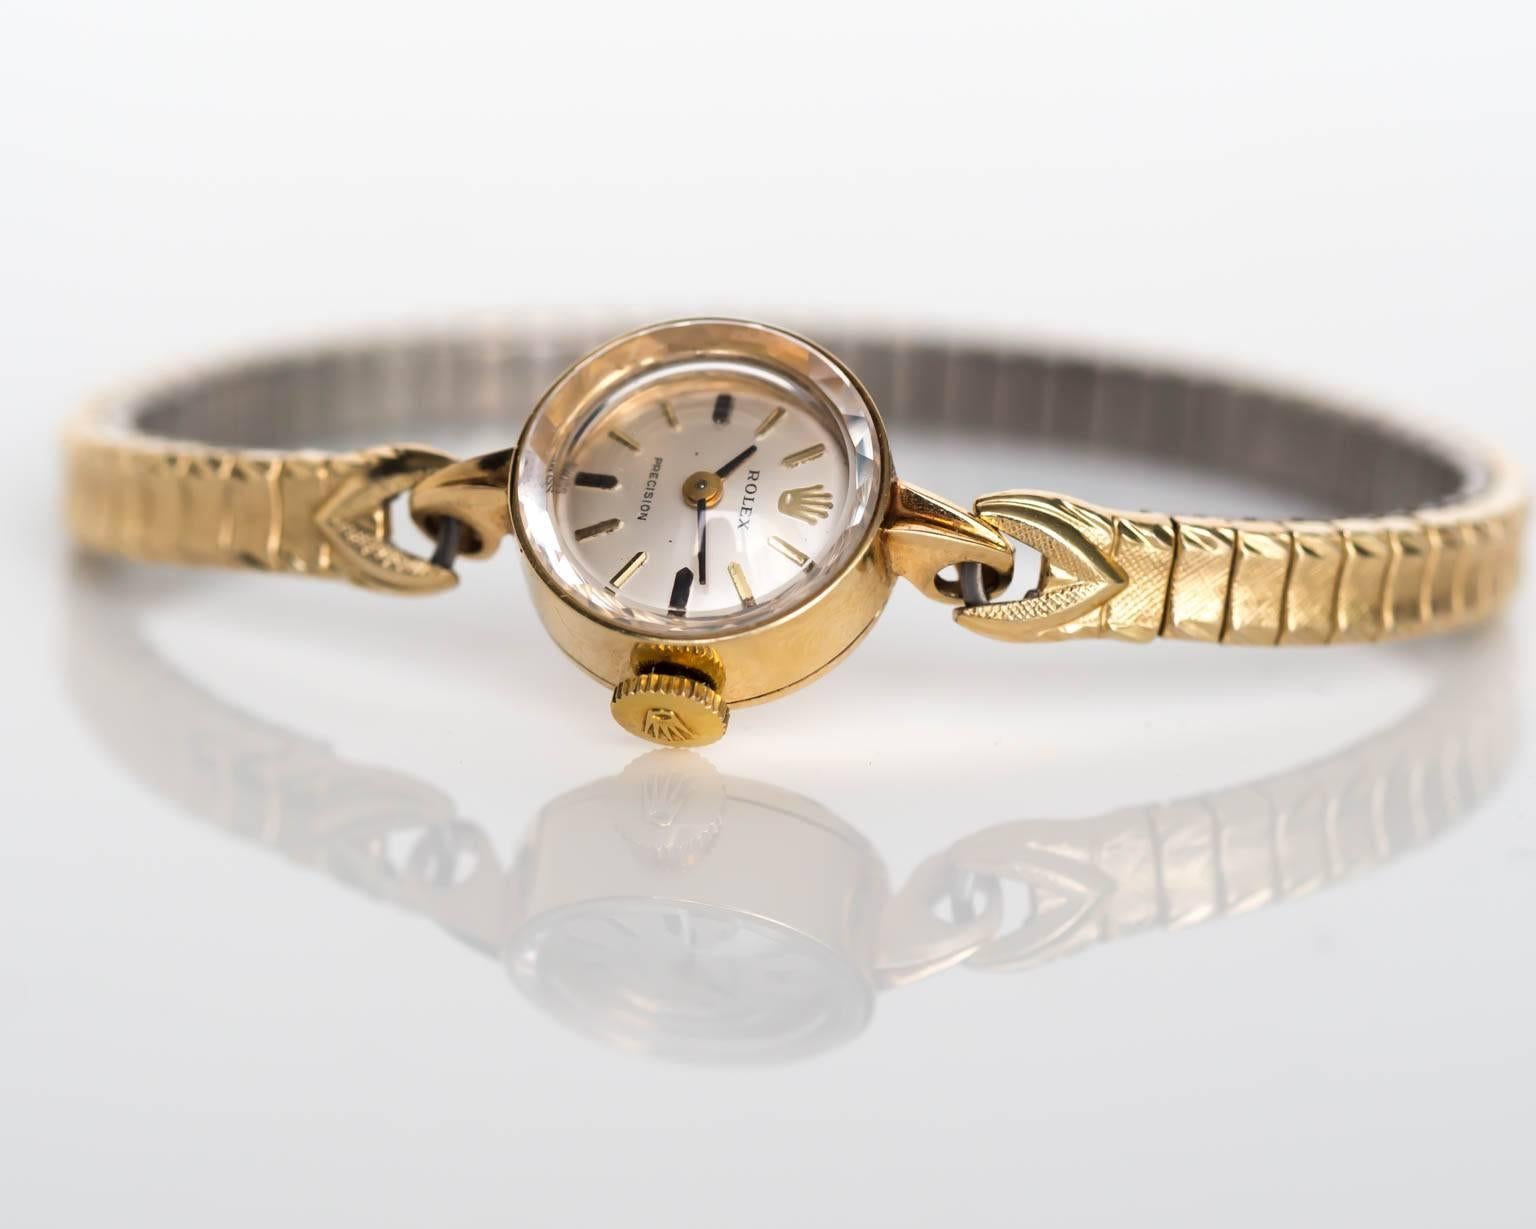 1940s women's watches